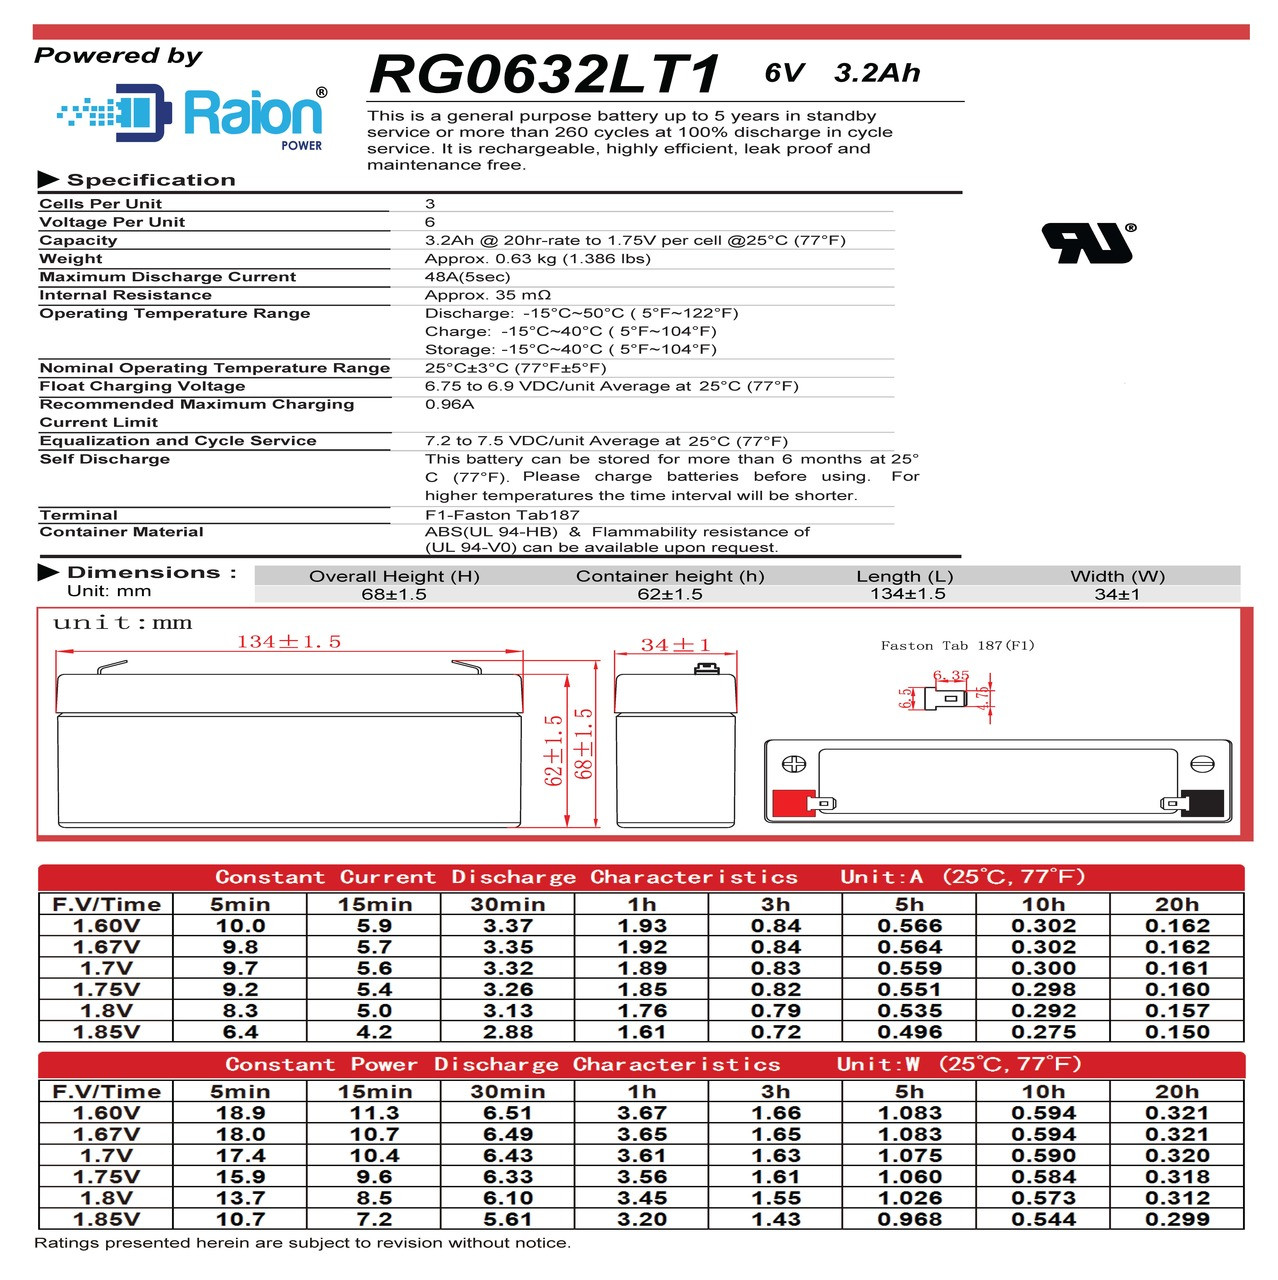 Raion Power RG0632LT1 6V 3.2Ah Battery Data Sheet for Health o meter 63719 Pediatric Scale